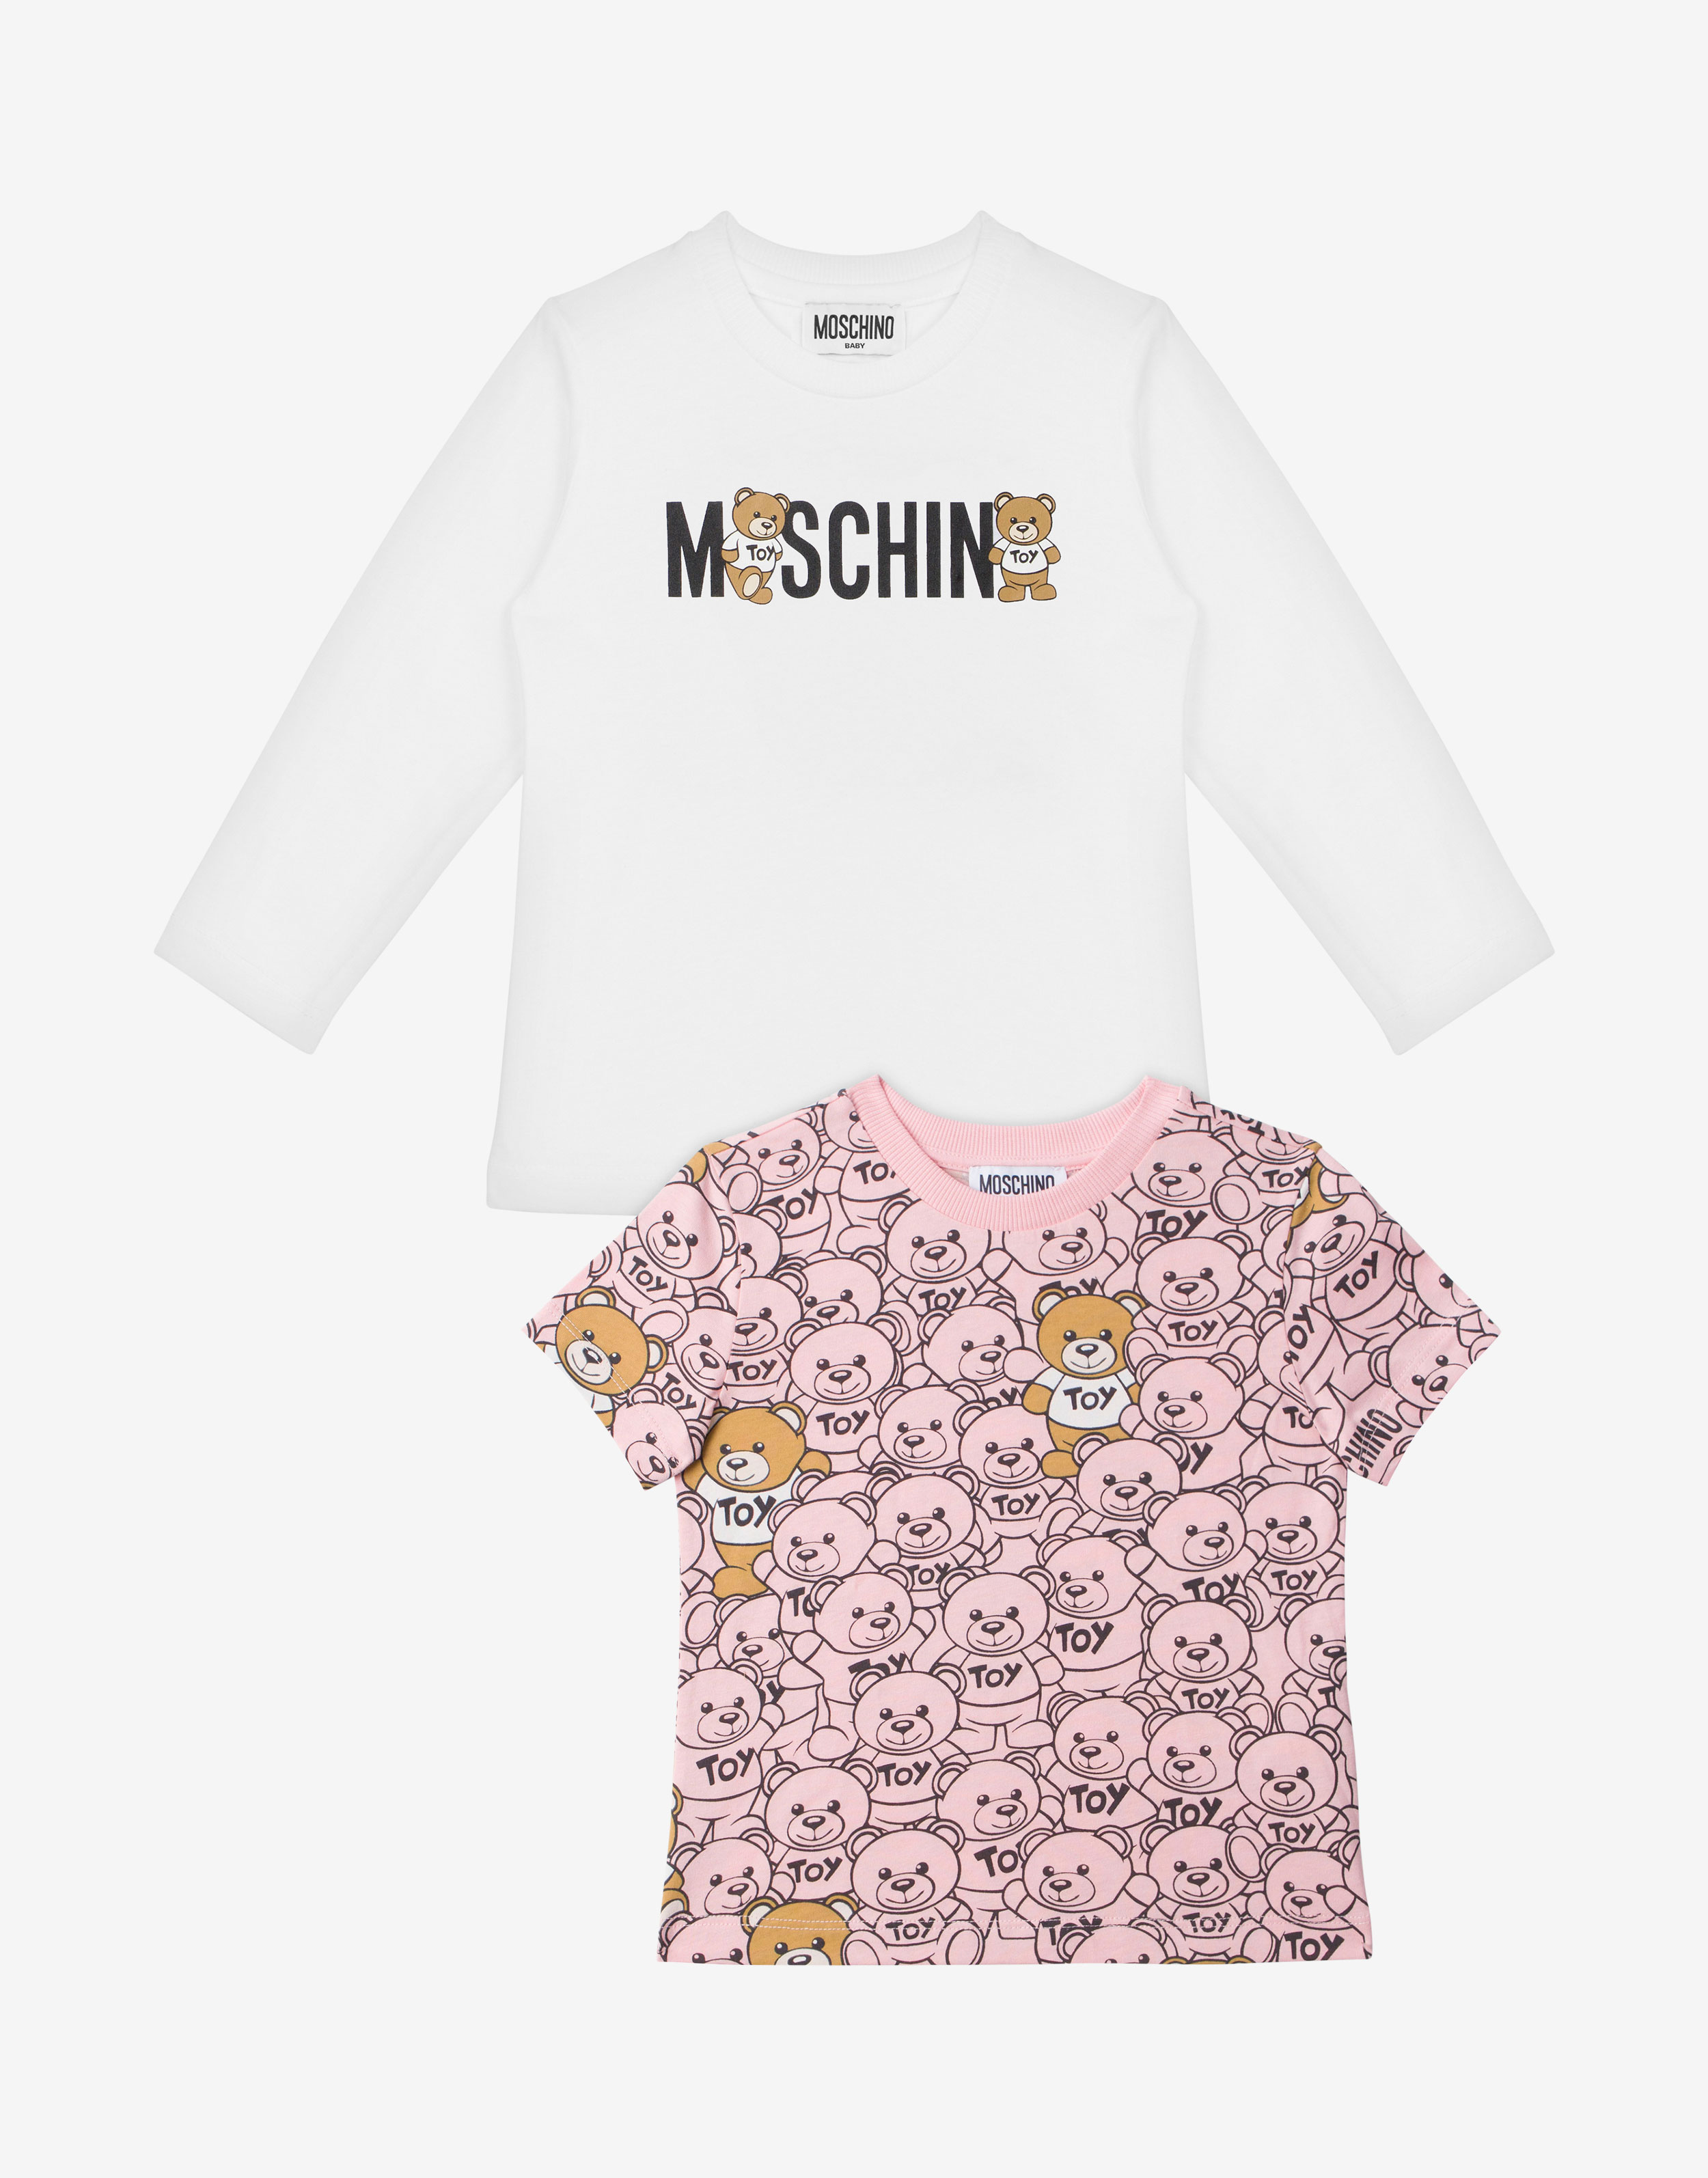 Moschino tee - Shirts & Tops